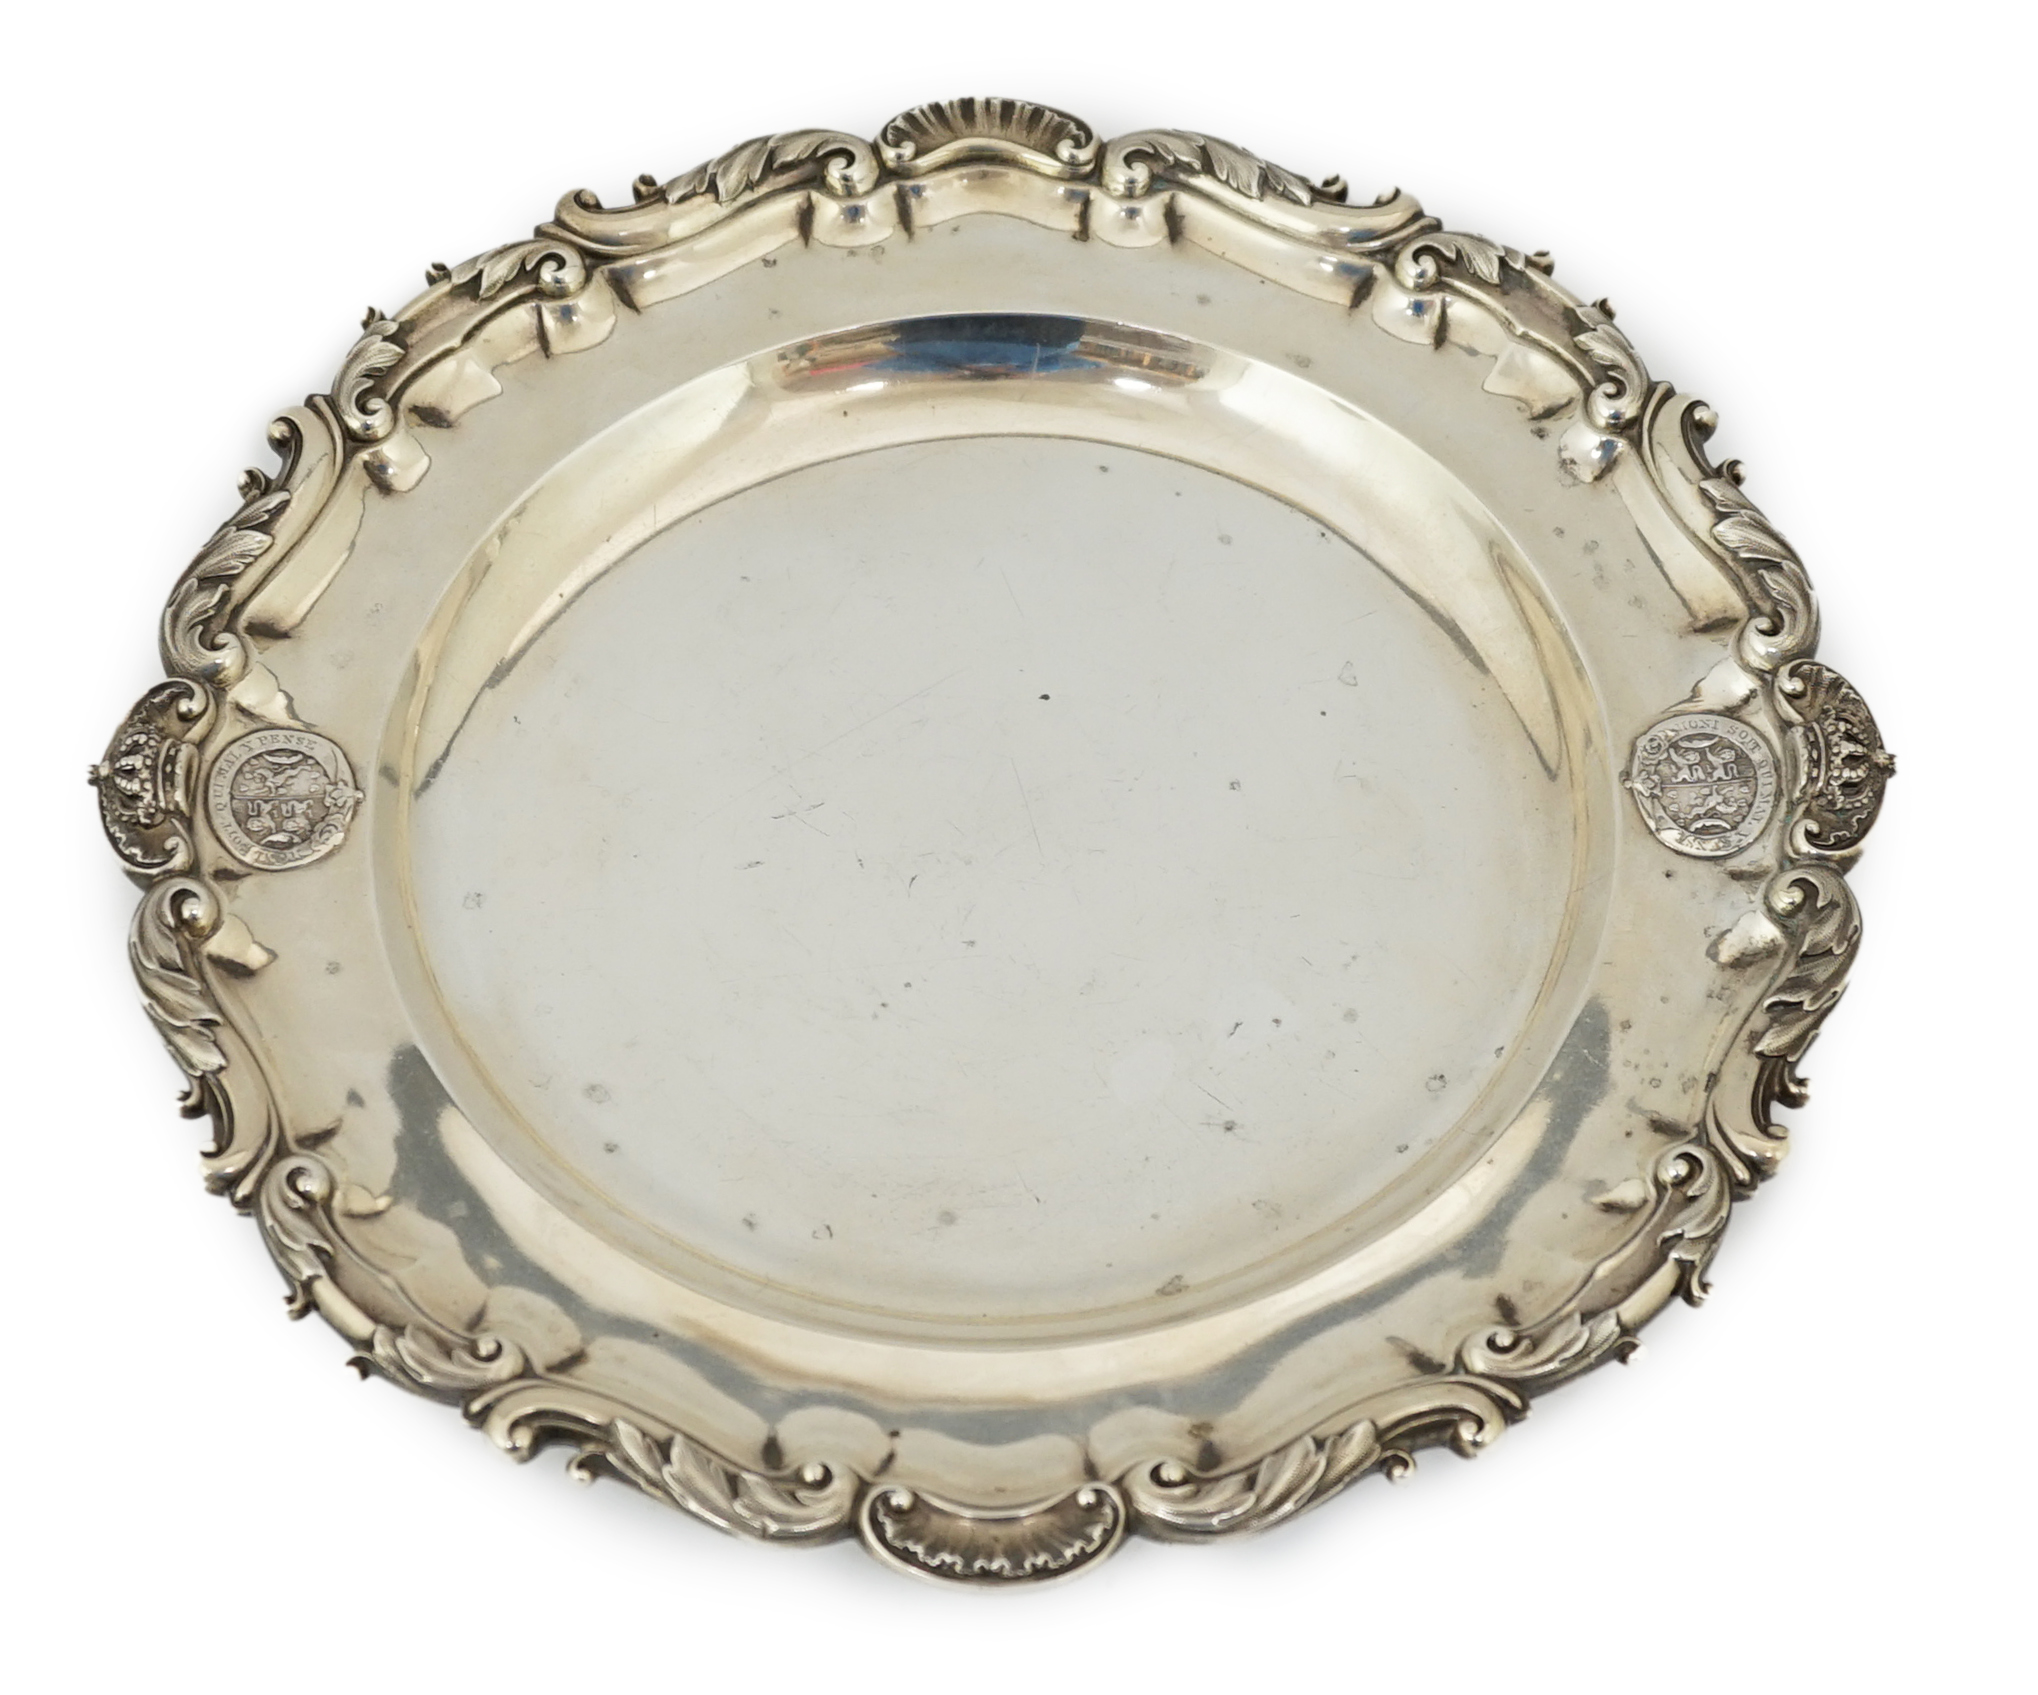 Duke of Brunswick service: An early Victorian silver serving plate by John Mortimer & John Samuel Hunt                                                                                                                      